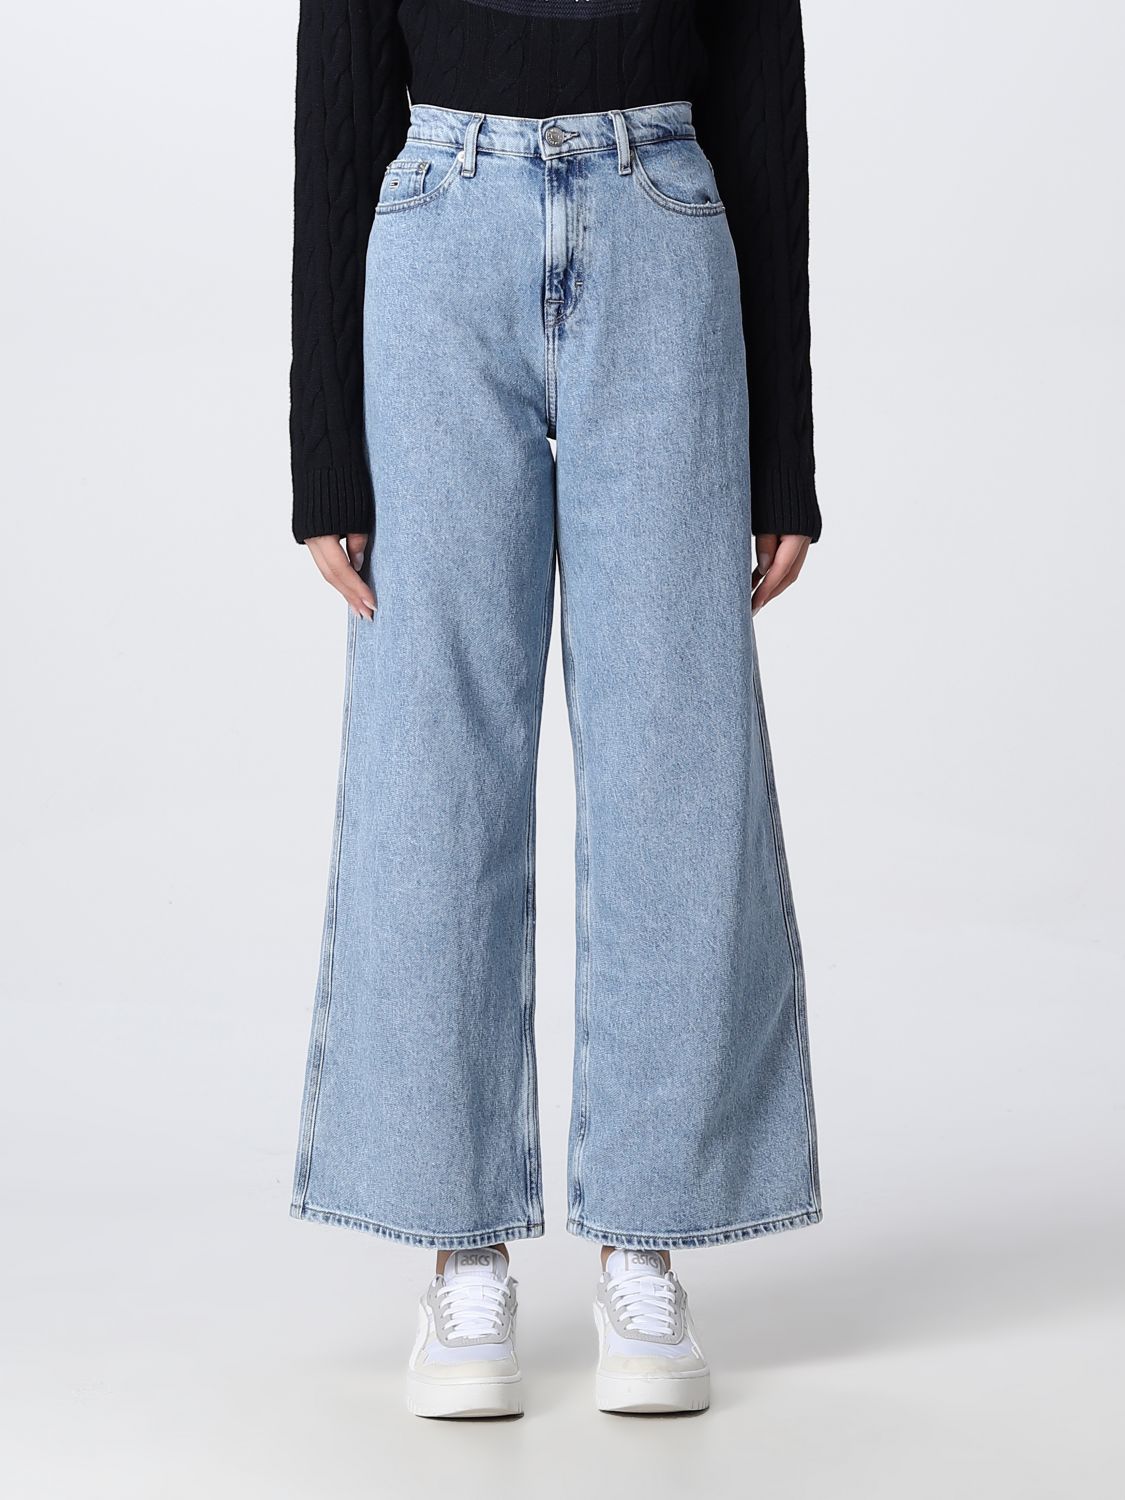 TOMMY JEANS: jeans for woman - Denim | Tommy Jeans jeans DW0DW14658 ...